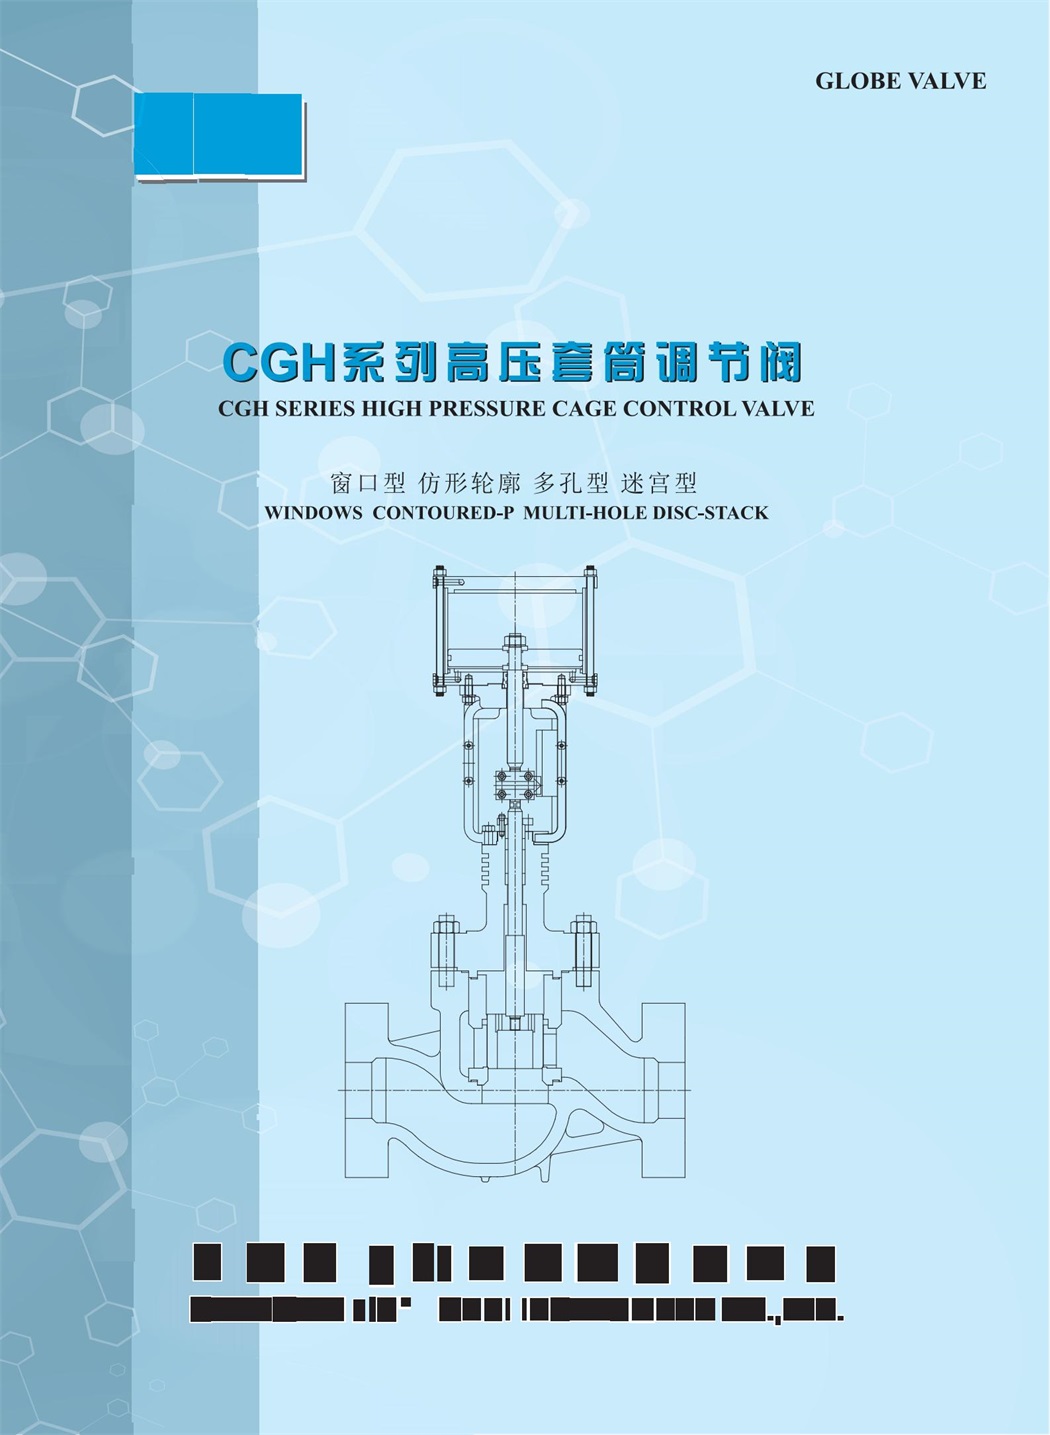 CGH Series High Pressure Cage Control Valve